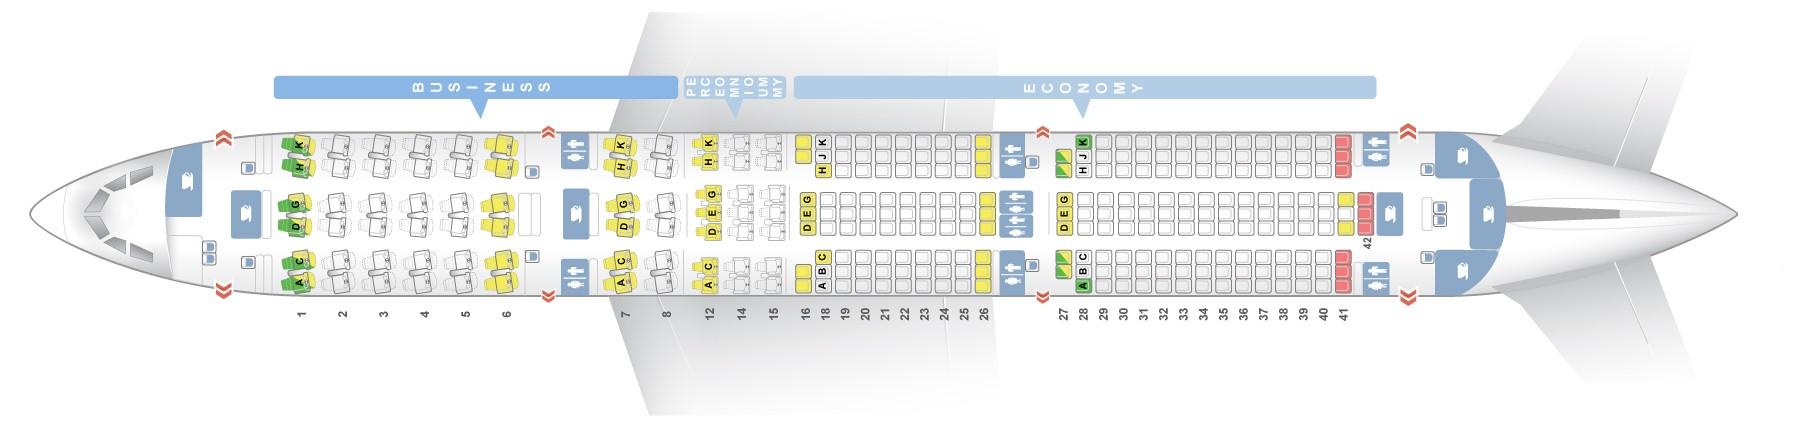 Lufthansa Seating Chart